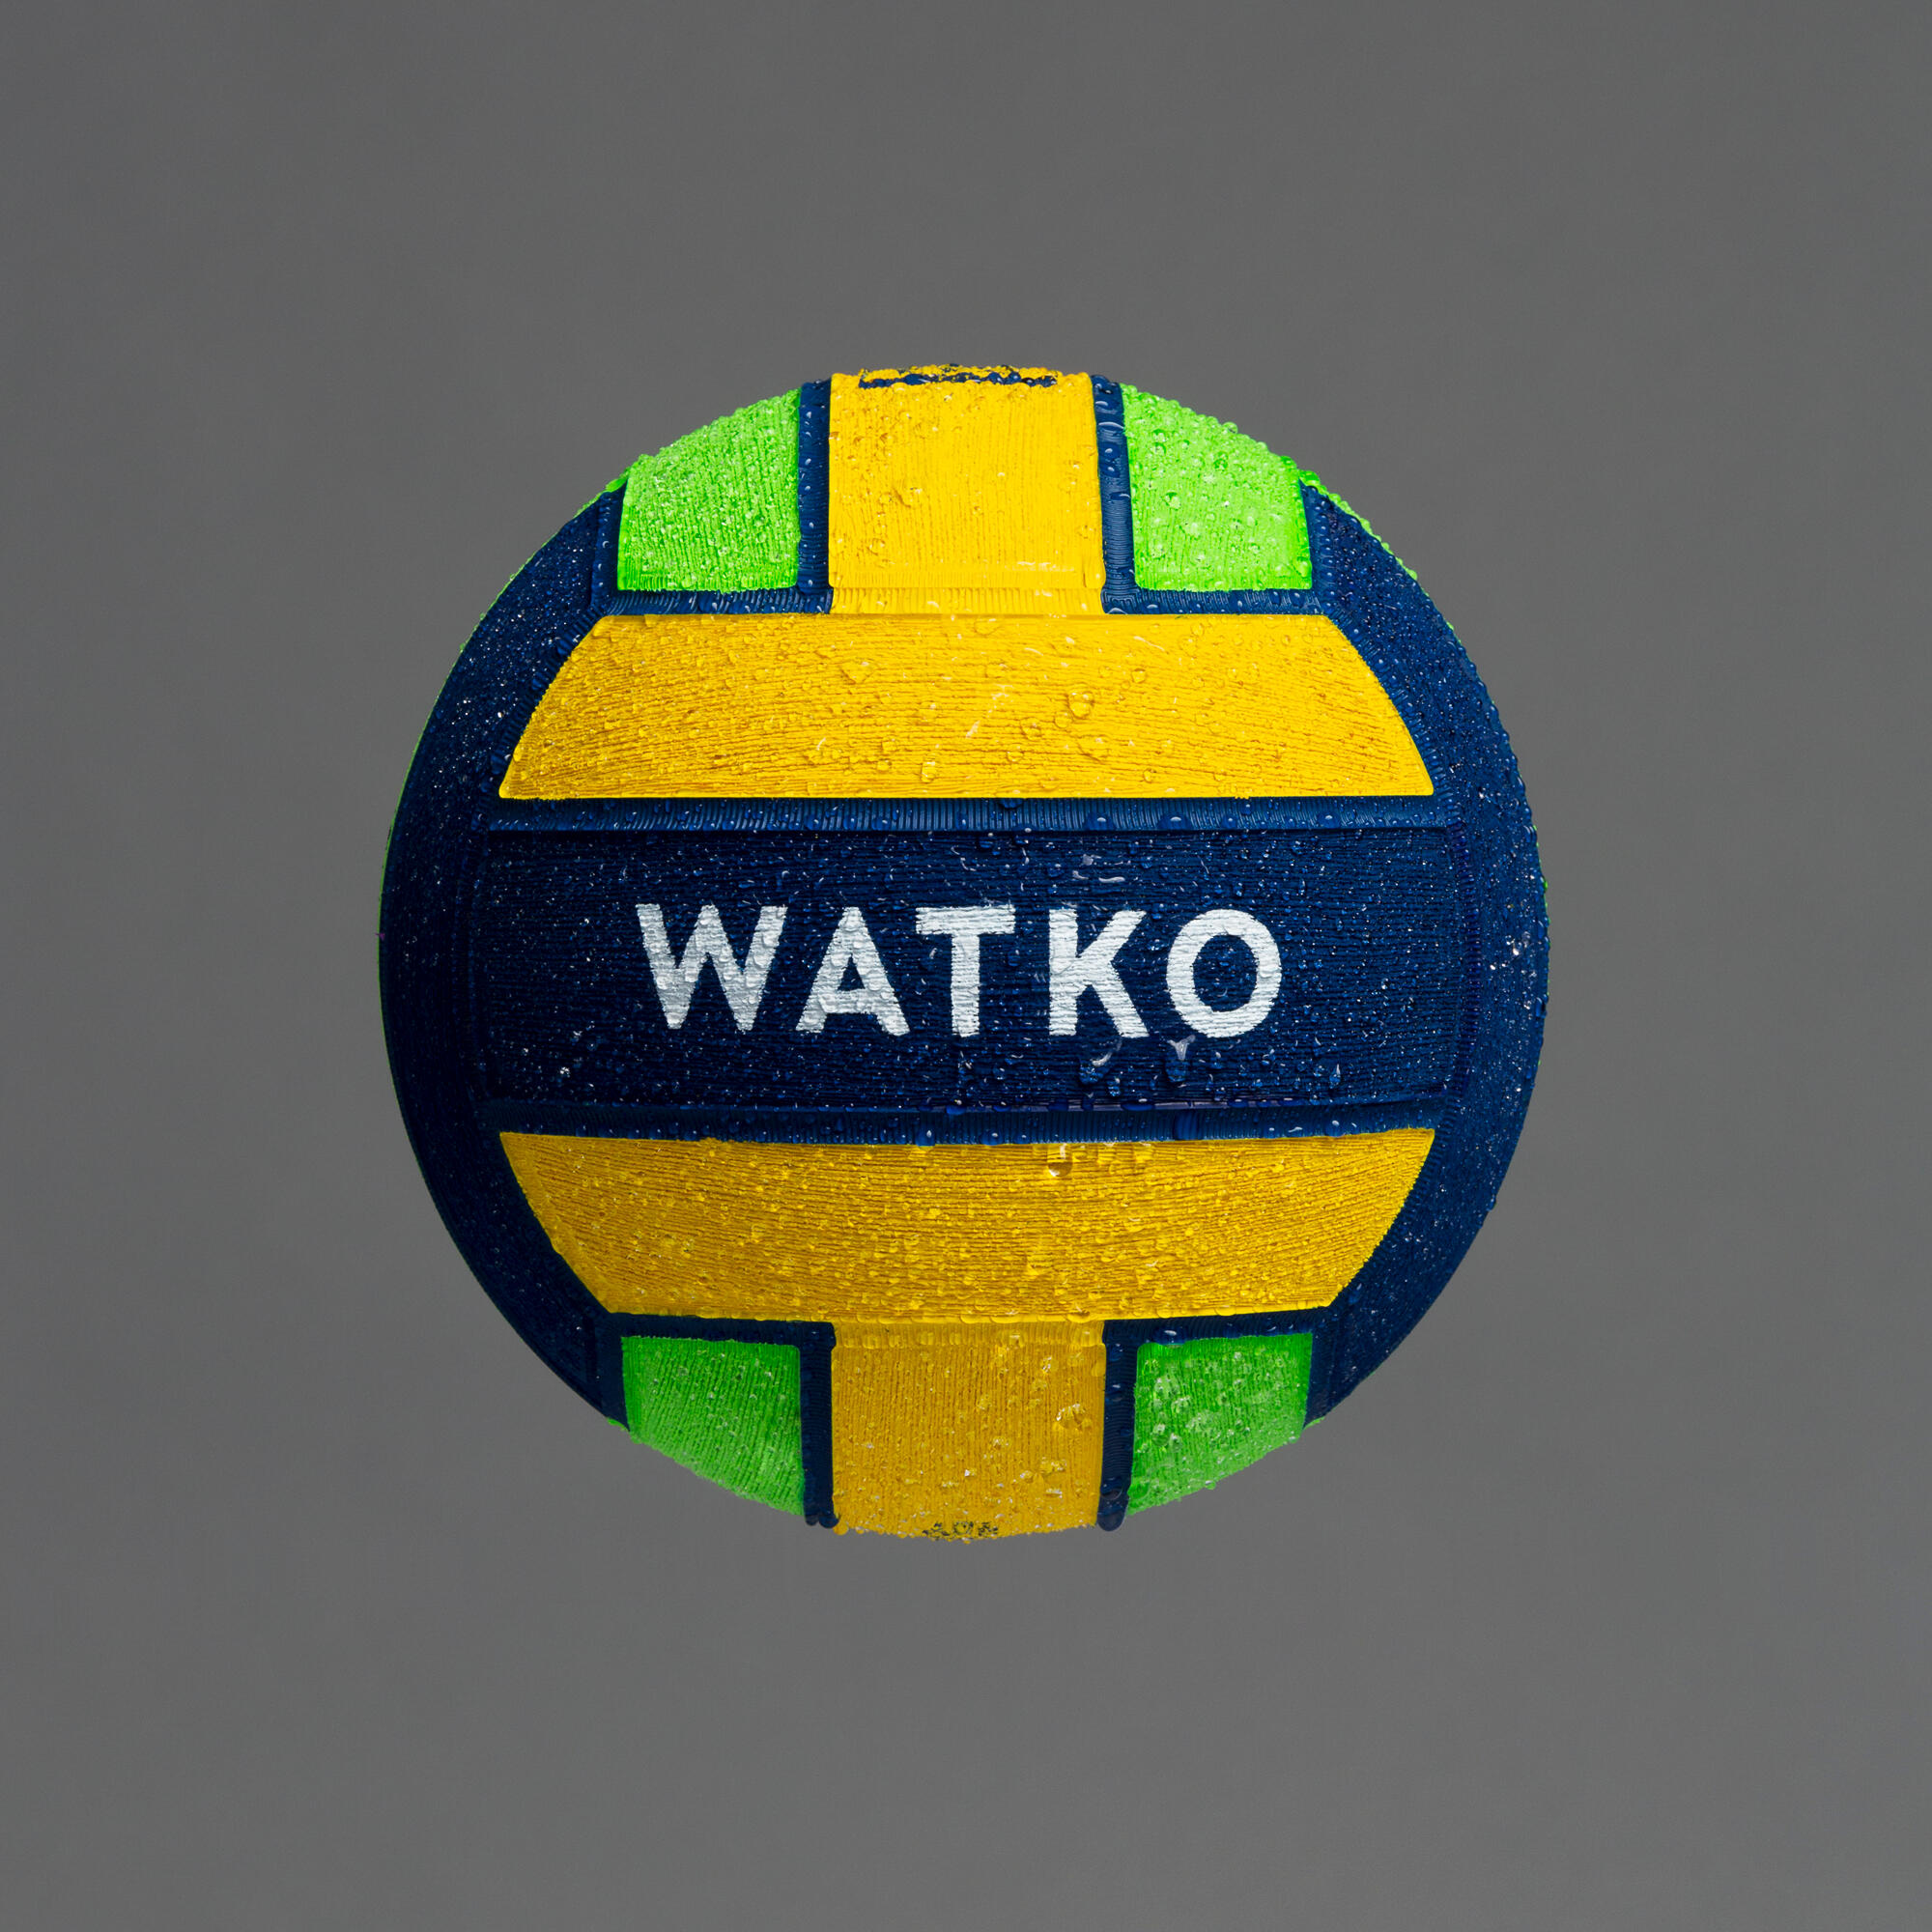 WATKO WATER POLO BALL WP900 SIZE 3